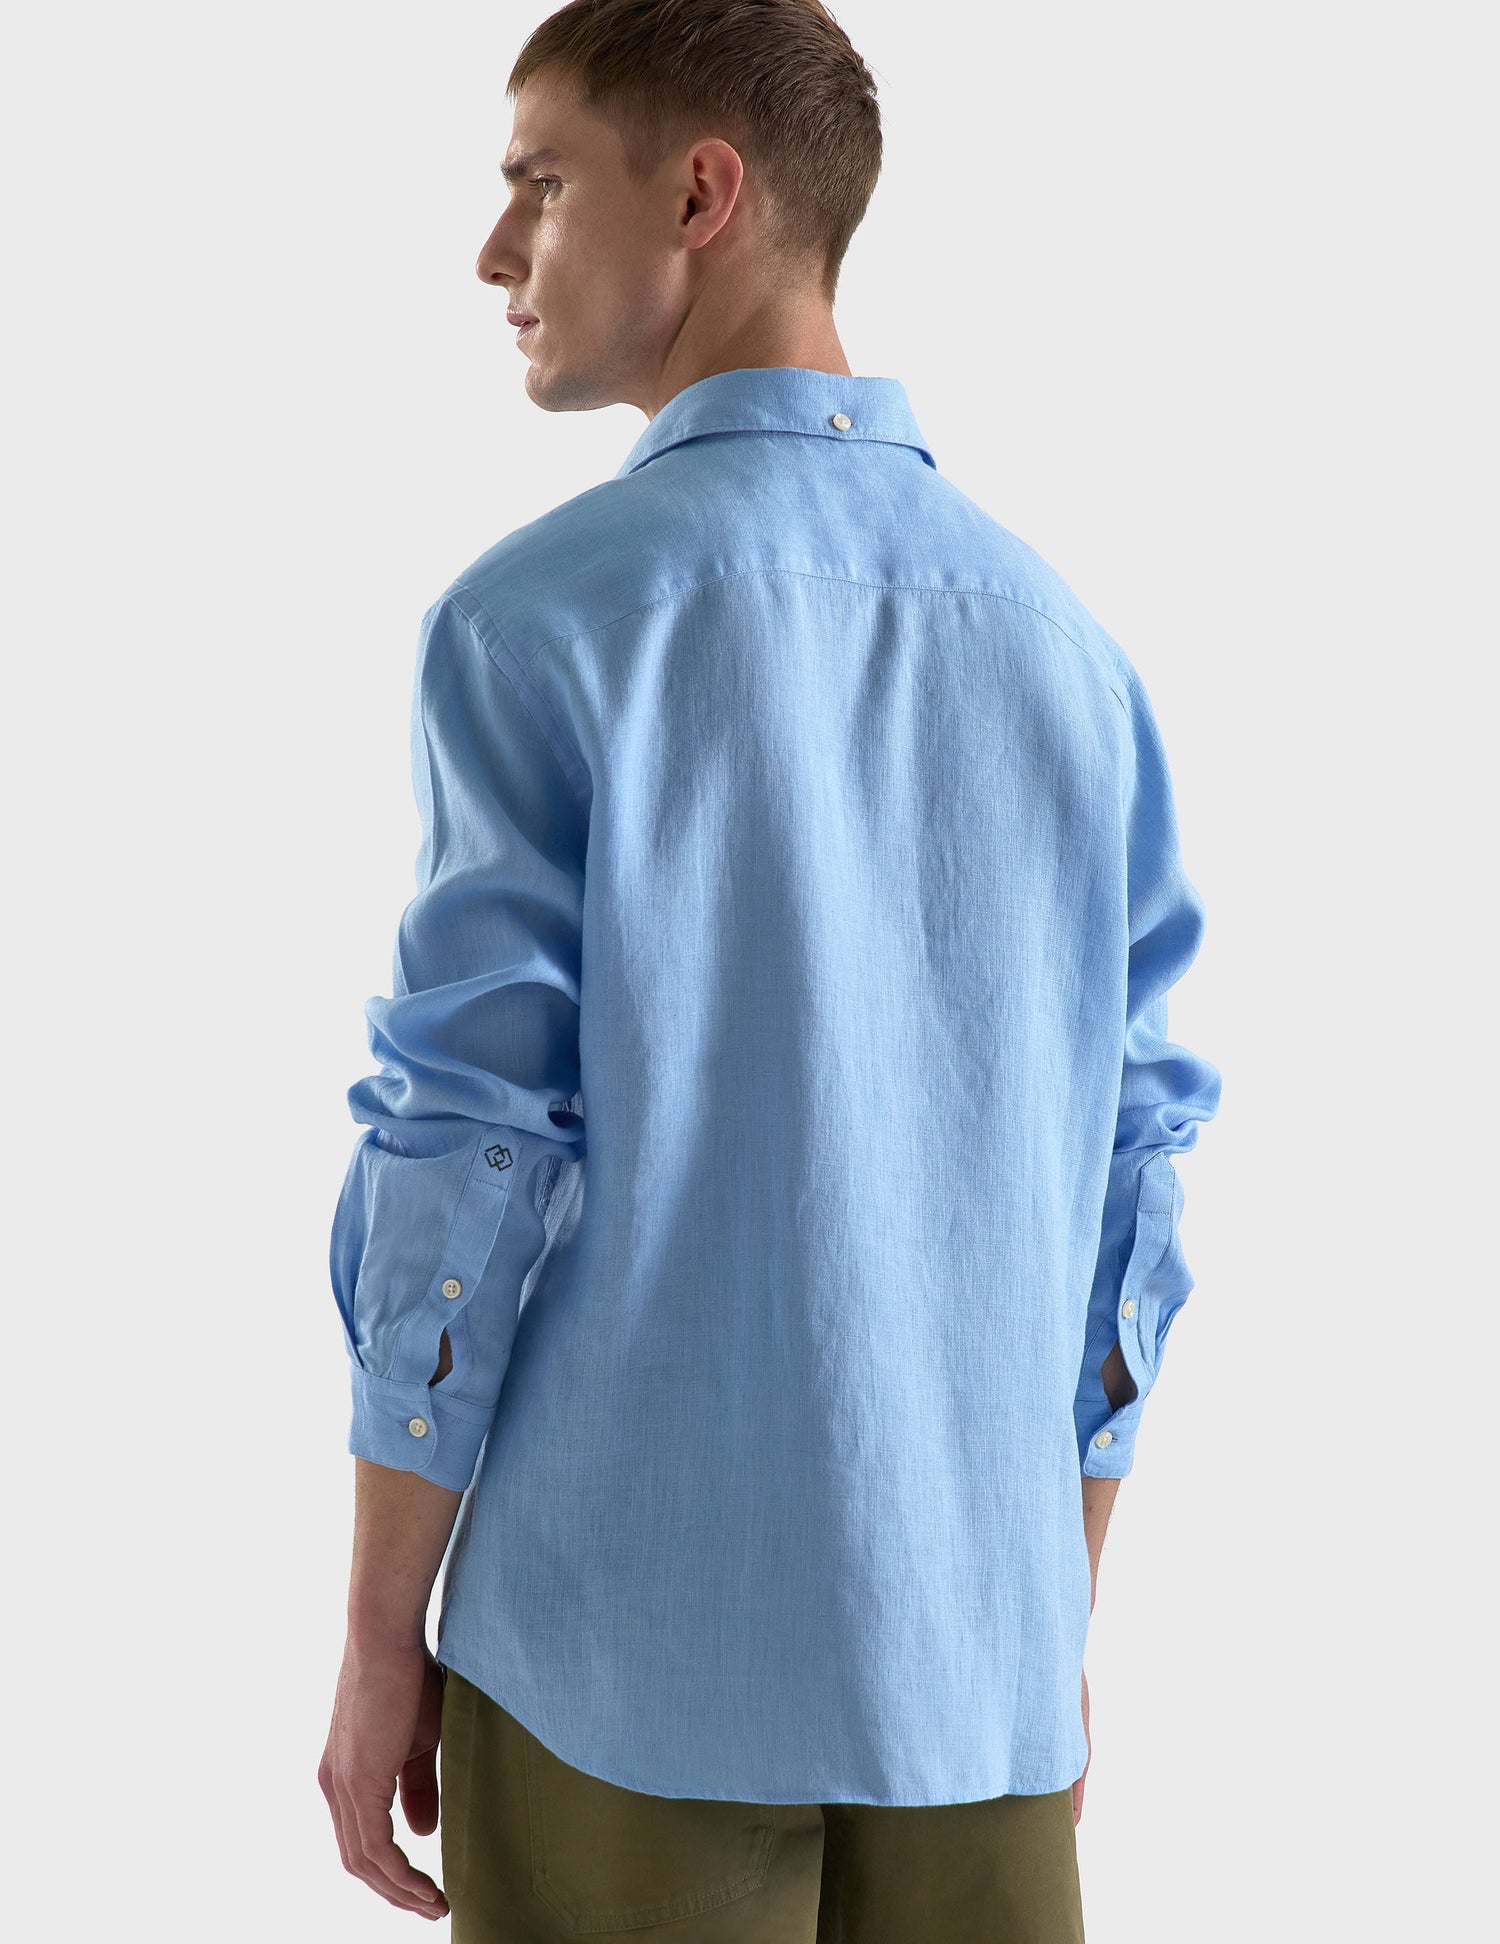 Aristote shirt in light blue linen - Linen - Italian Collar#2